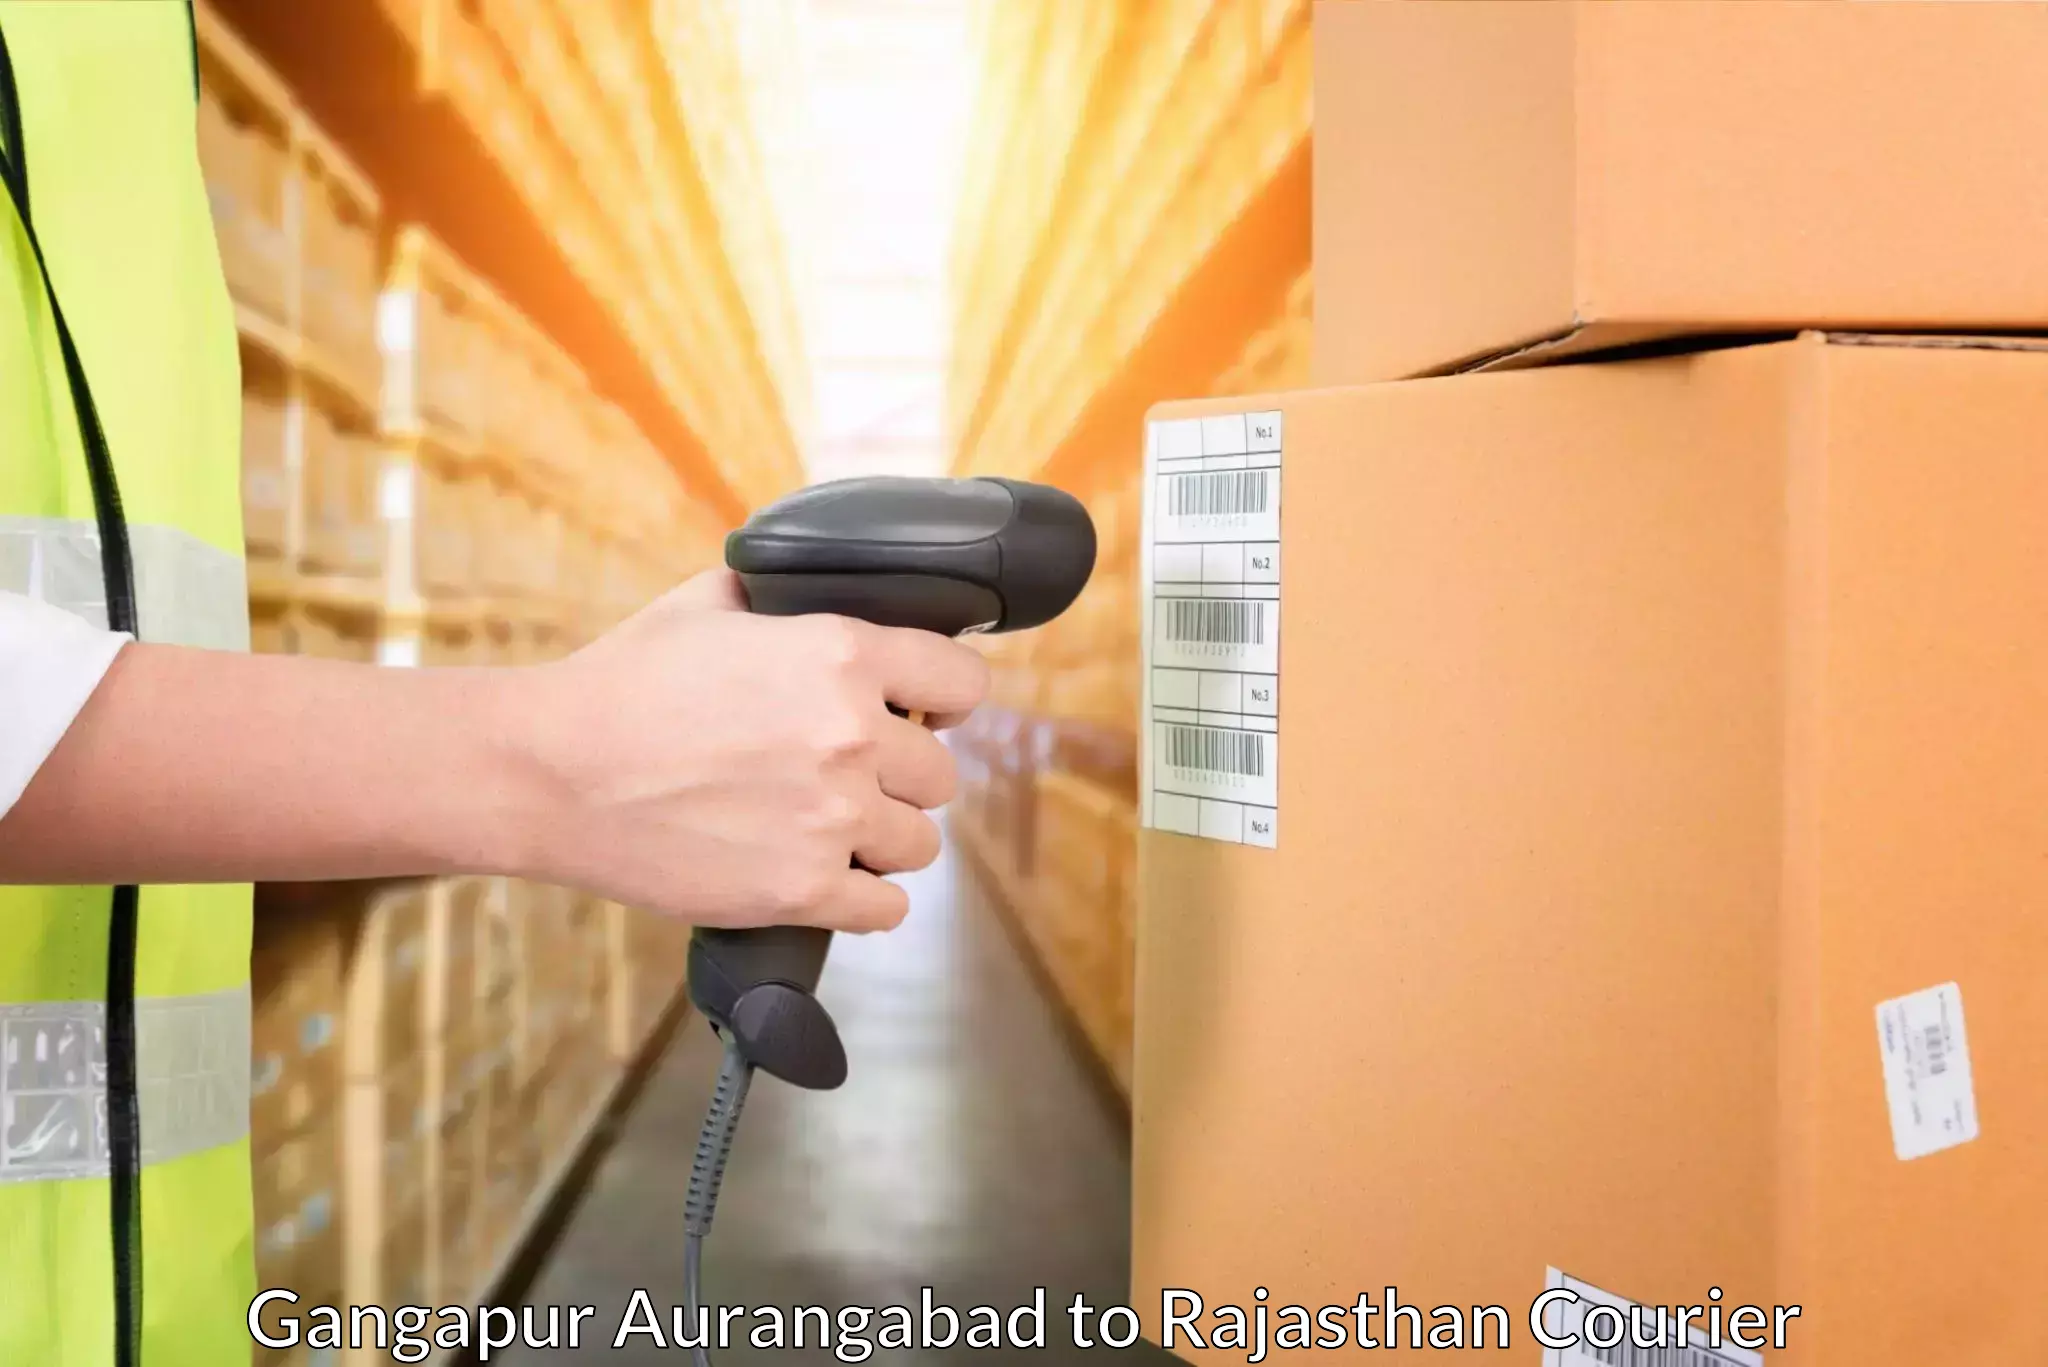 Courier service comparison Gangapur Aurangabad to Rajasthan